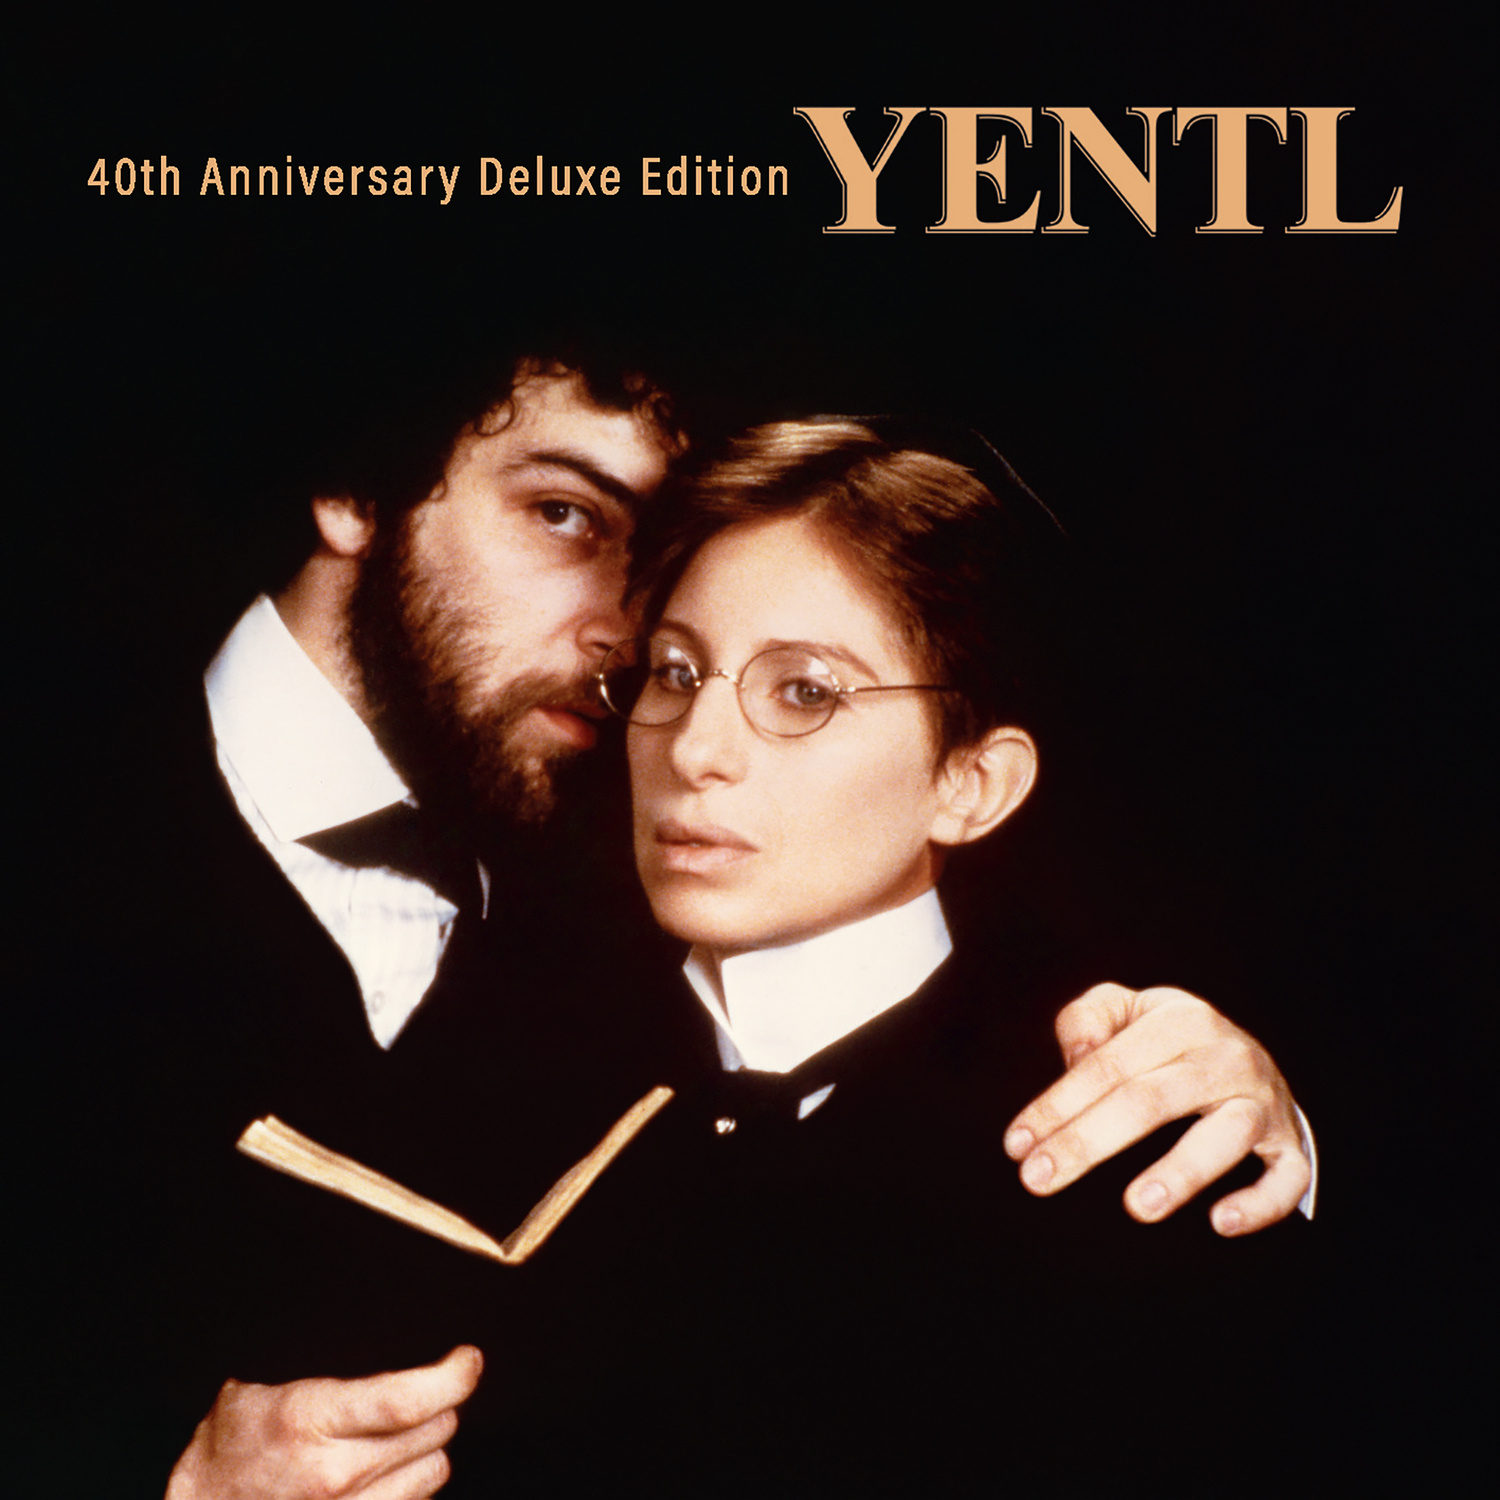 YENTL - 40TH ANNIVERSARY DELUXE EDITION